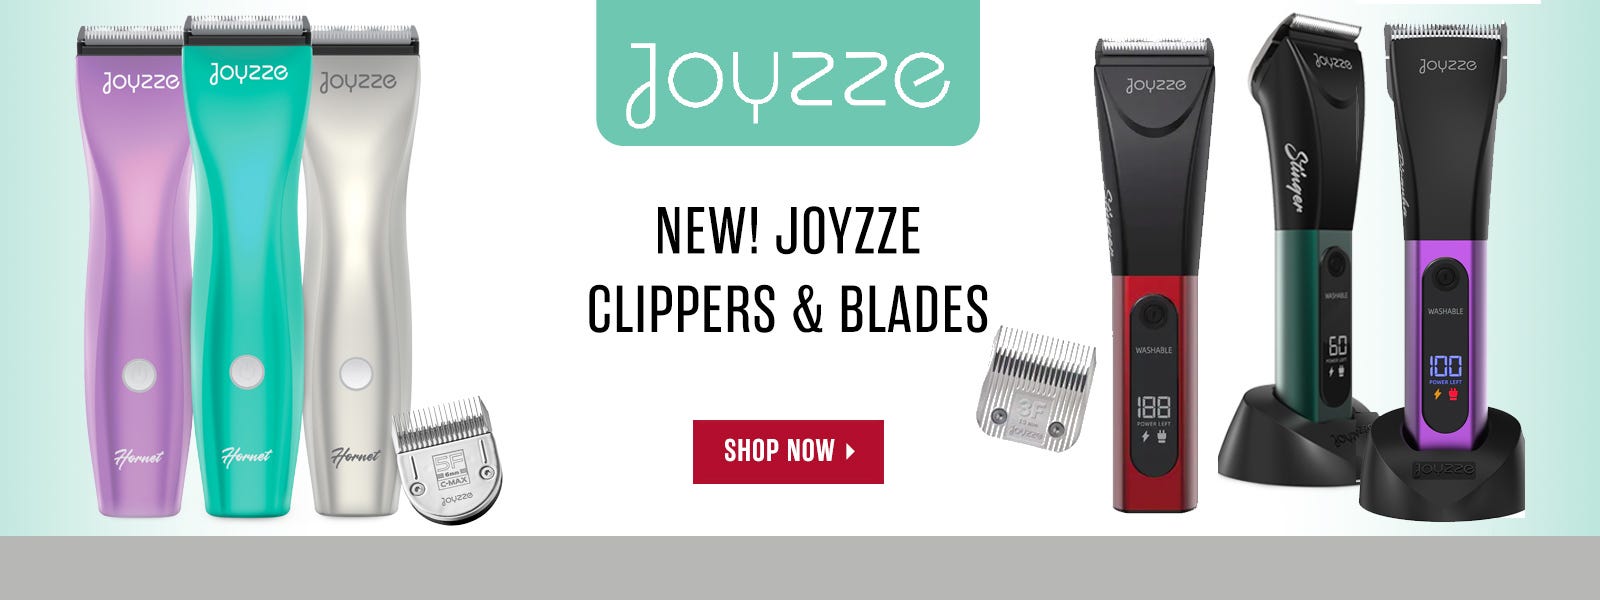 Joyzze now in stock!